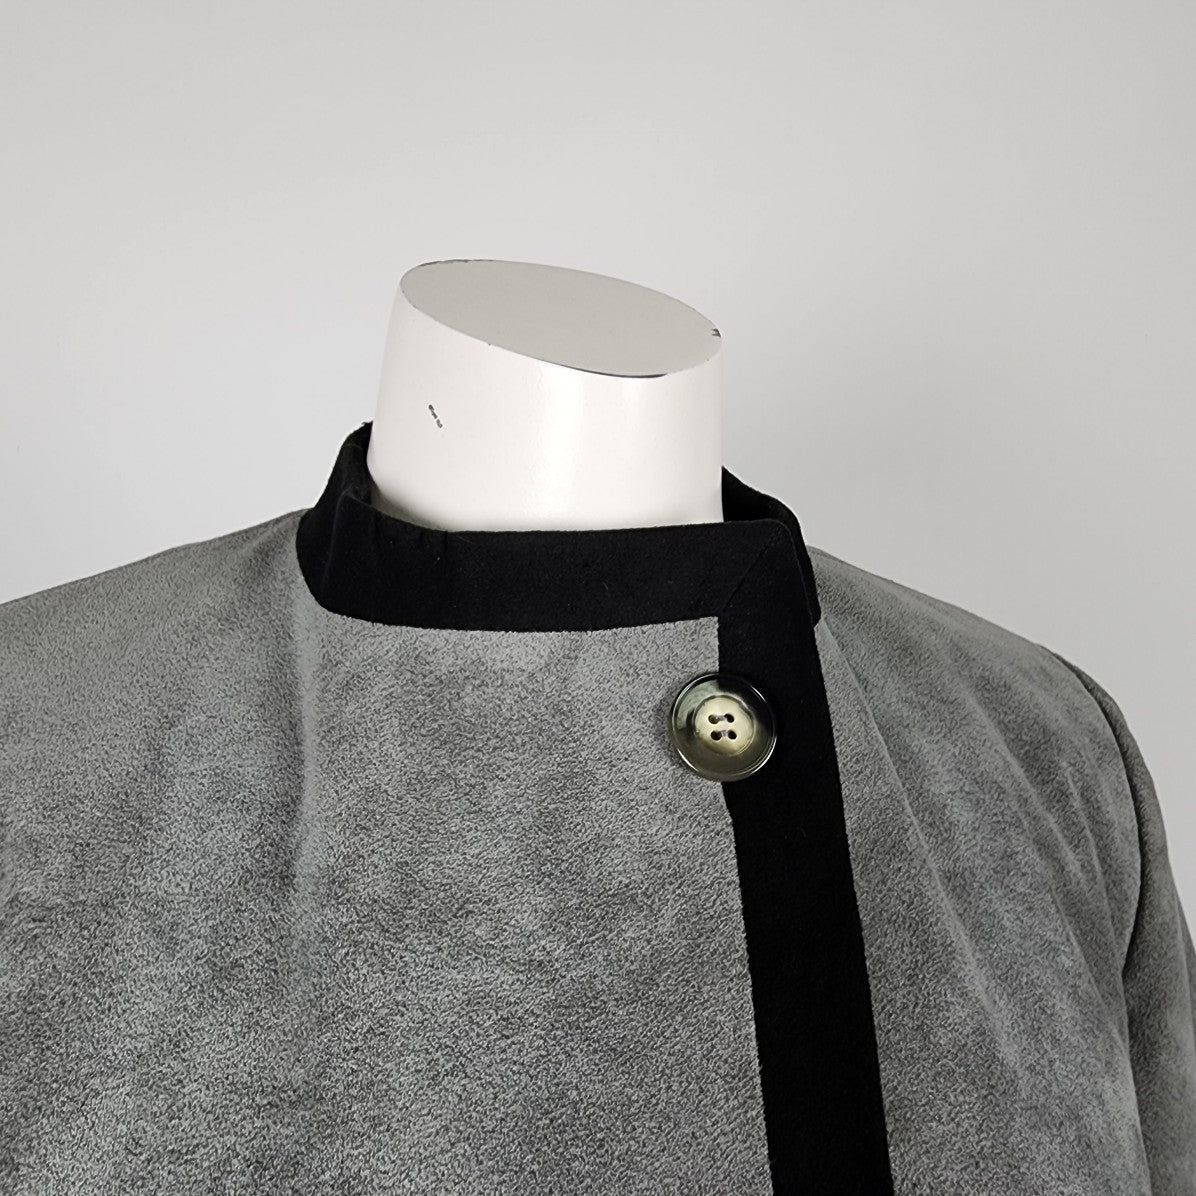 Vintage Olympic Grey & Black Pea Coat Size S/M